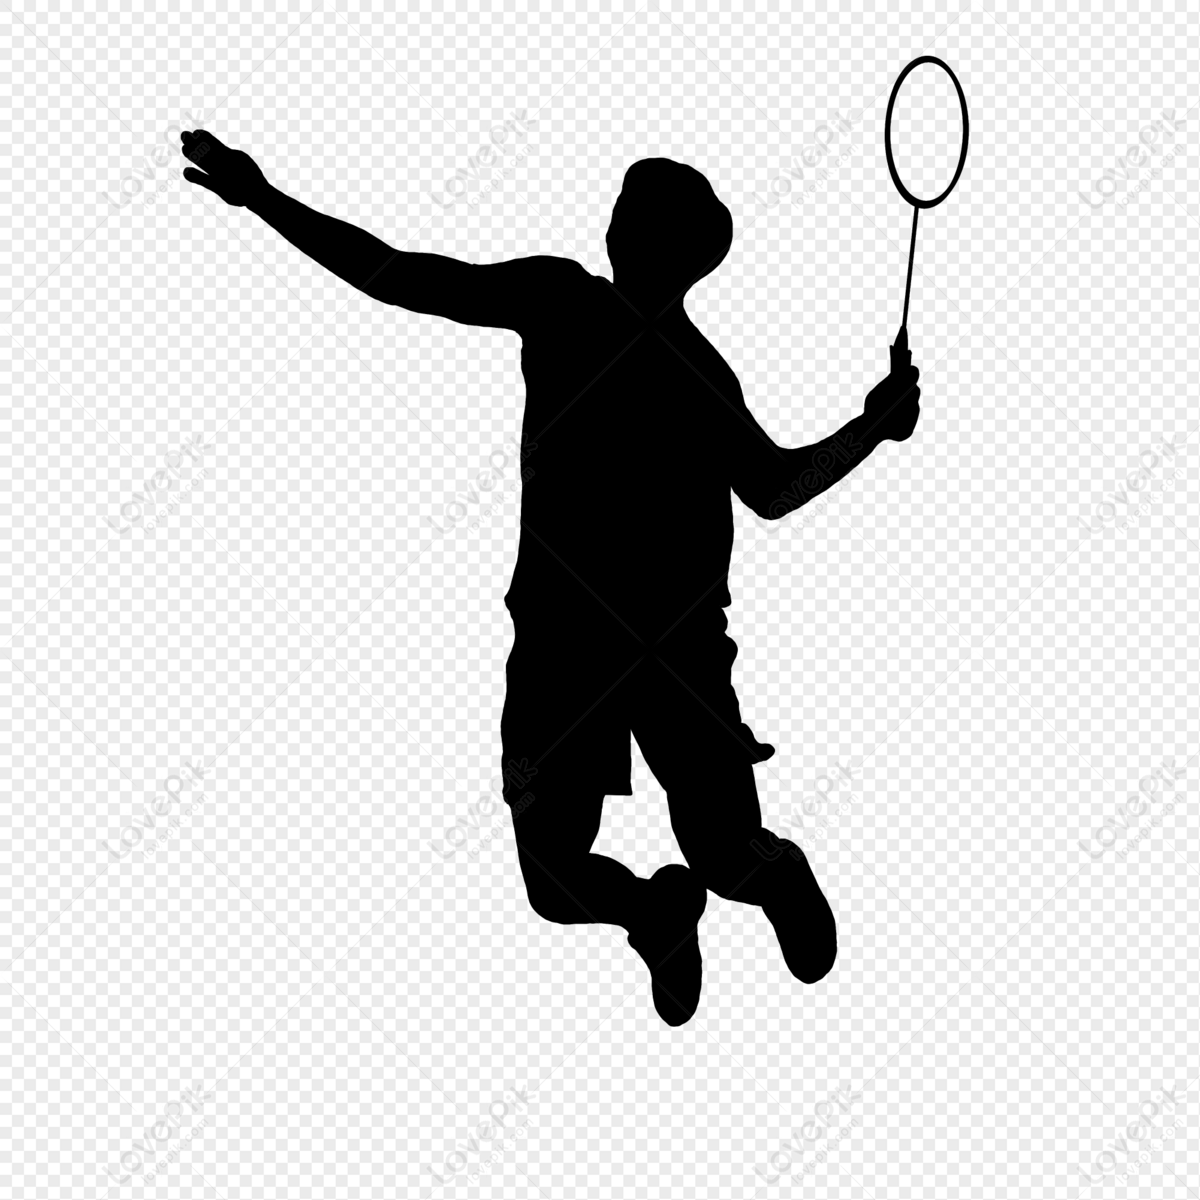 Badminton smash silhouette, material, badminton silhouette, tennis silhouette png transparent background